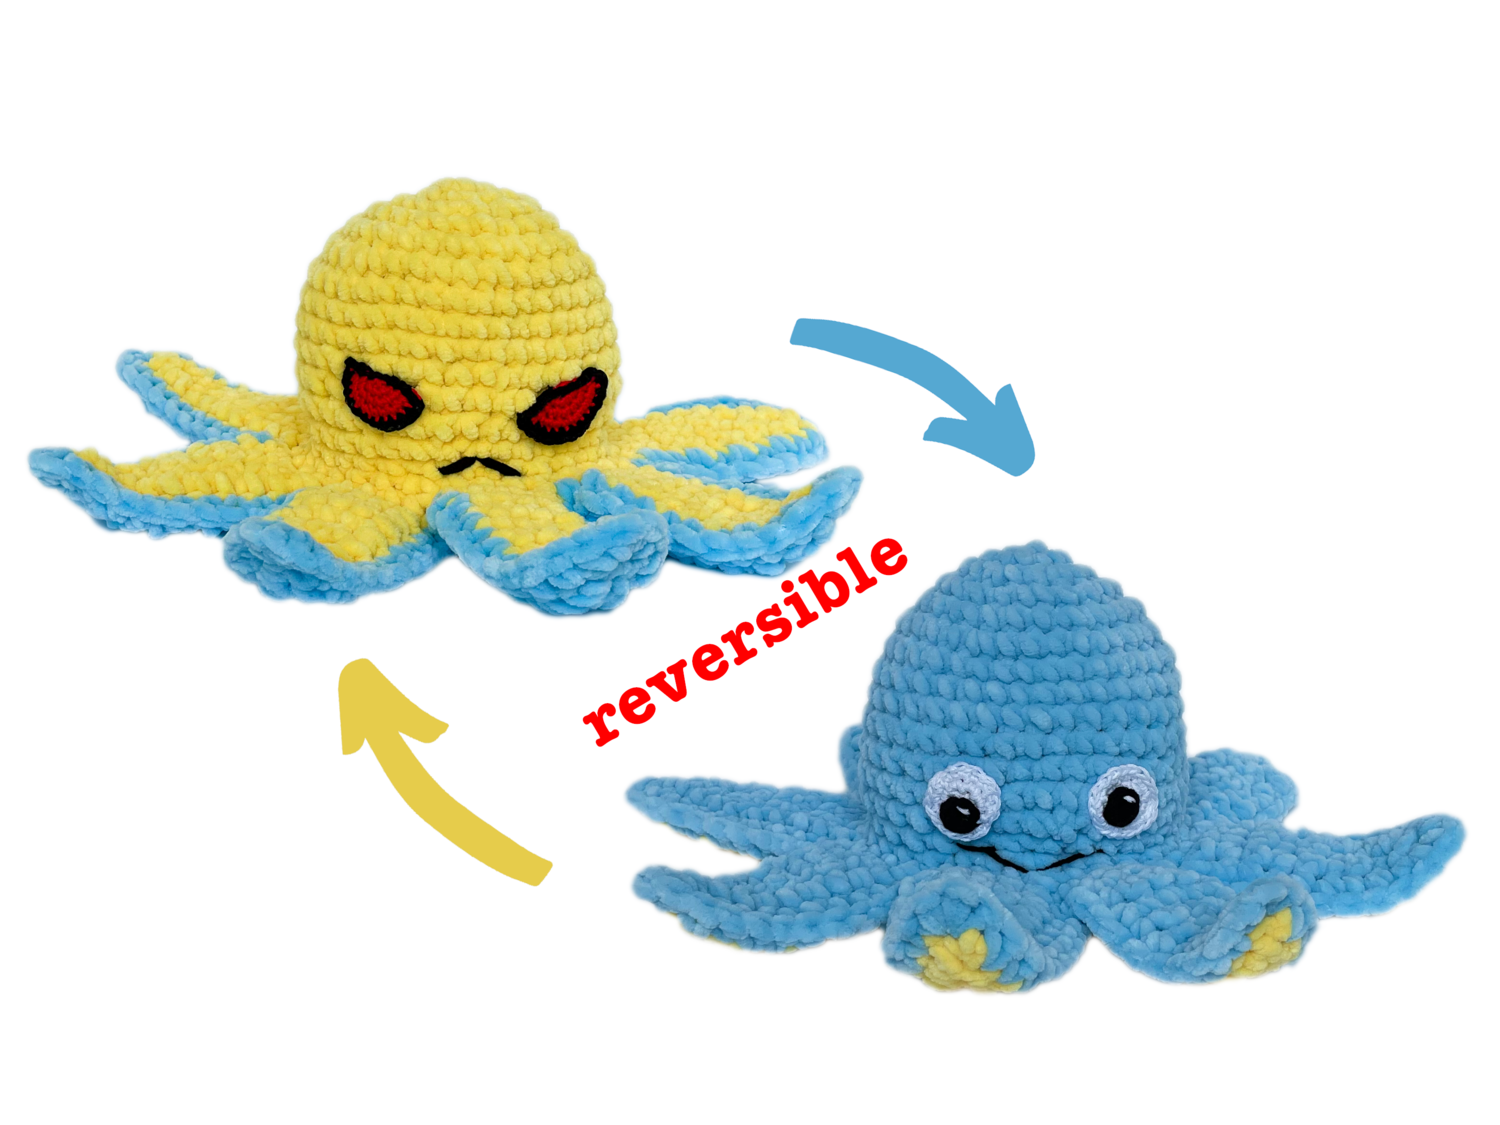 Reversible octopus amigurumi crochet pattern, interactive squid plush toy